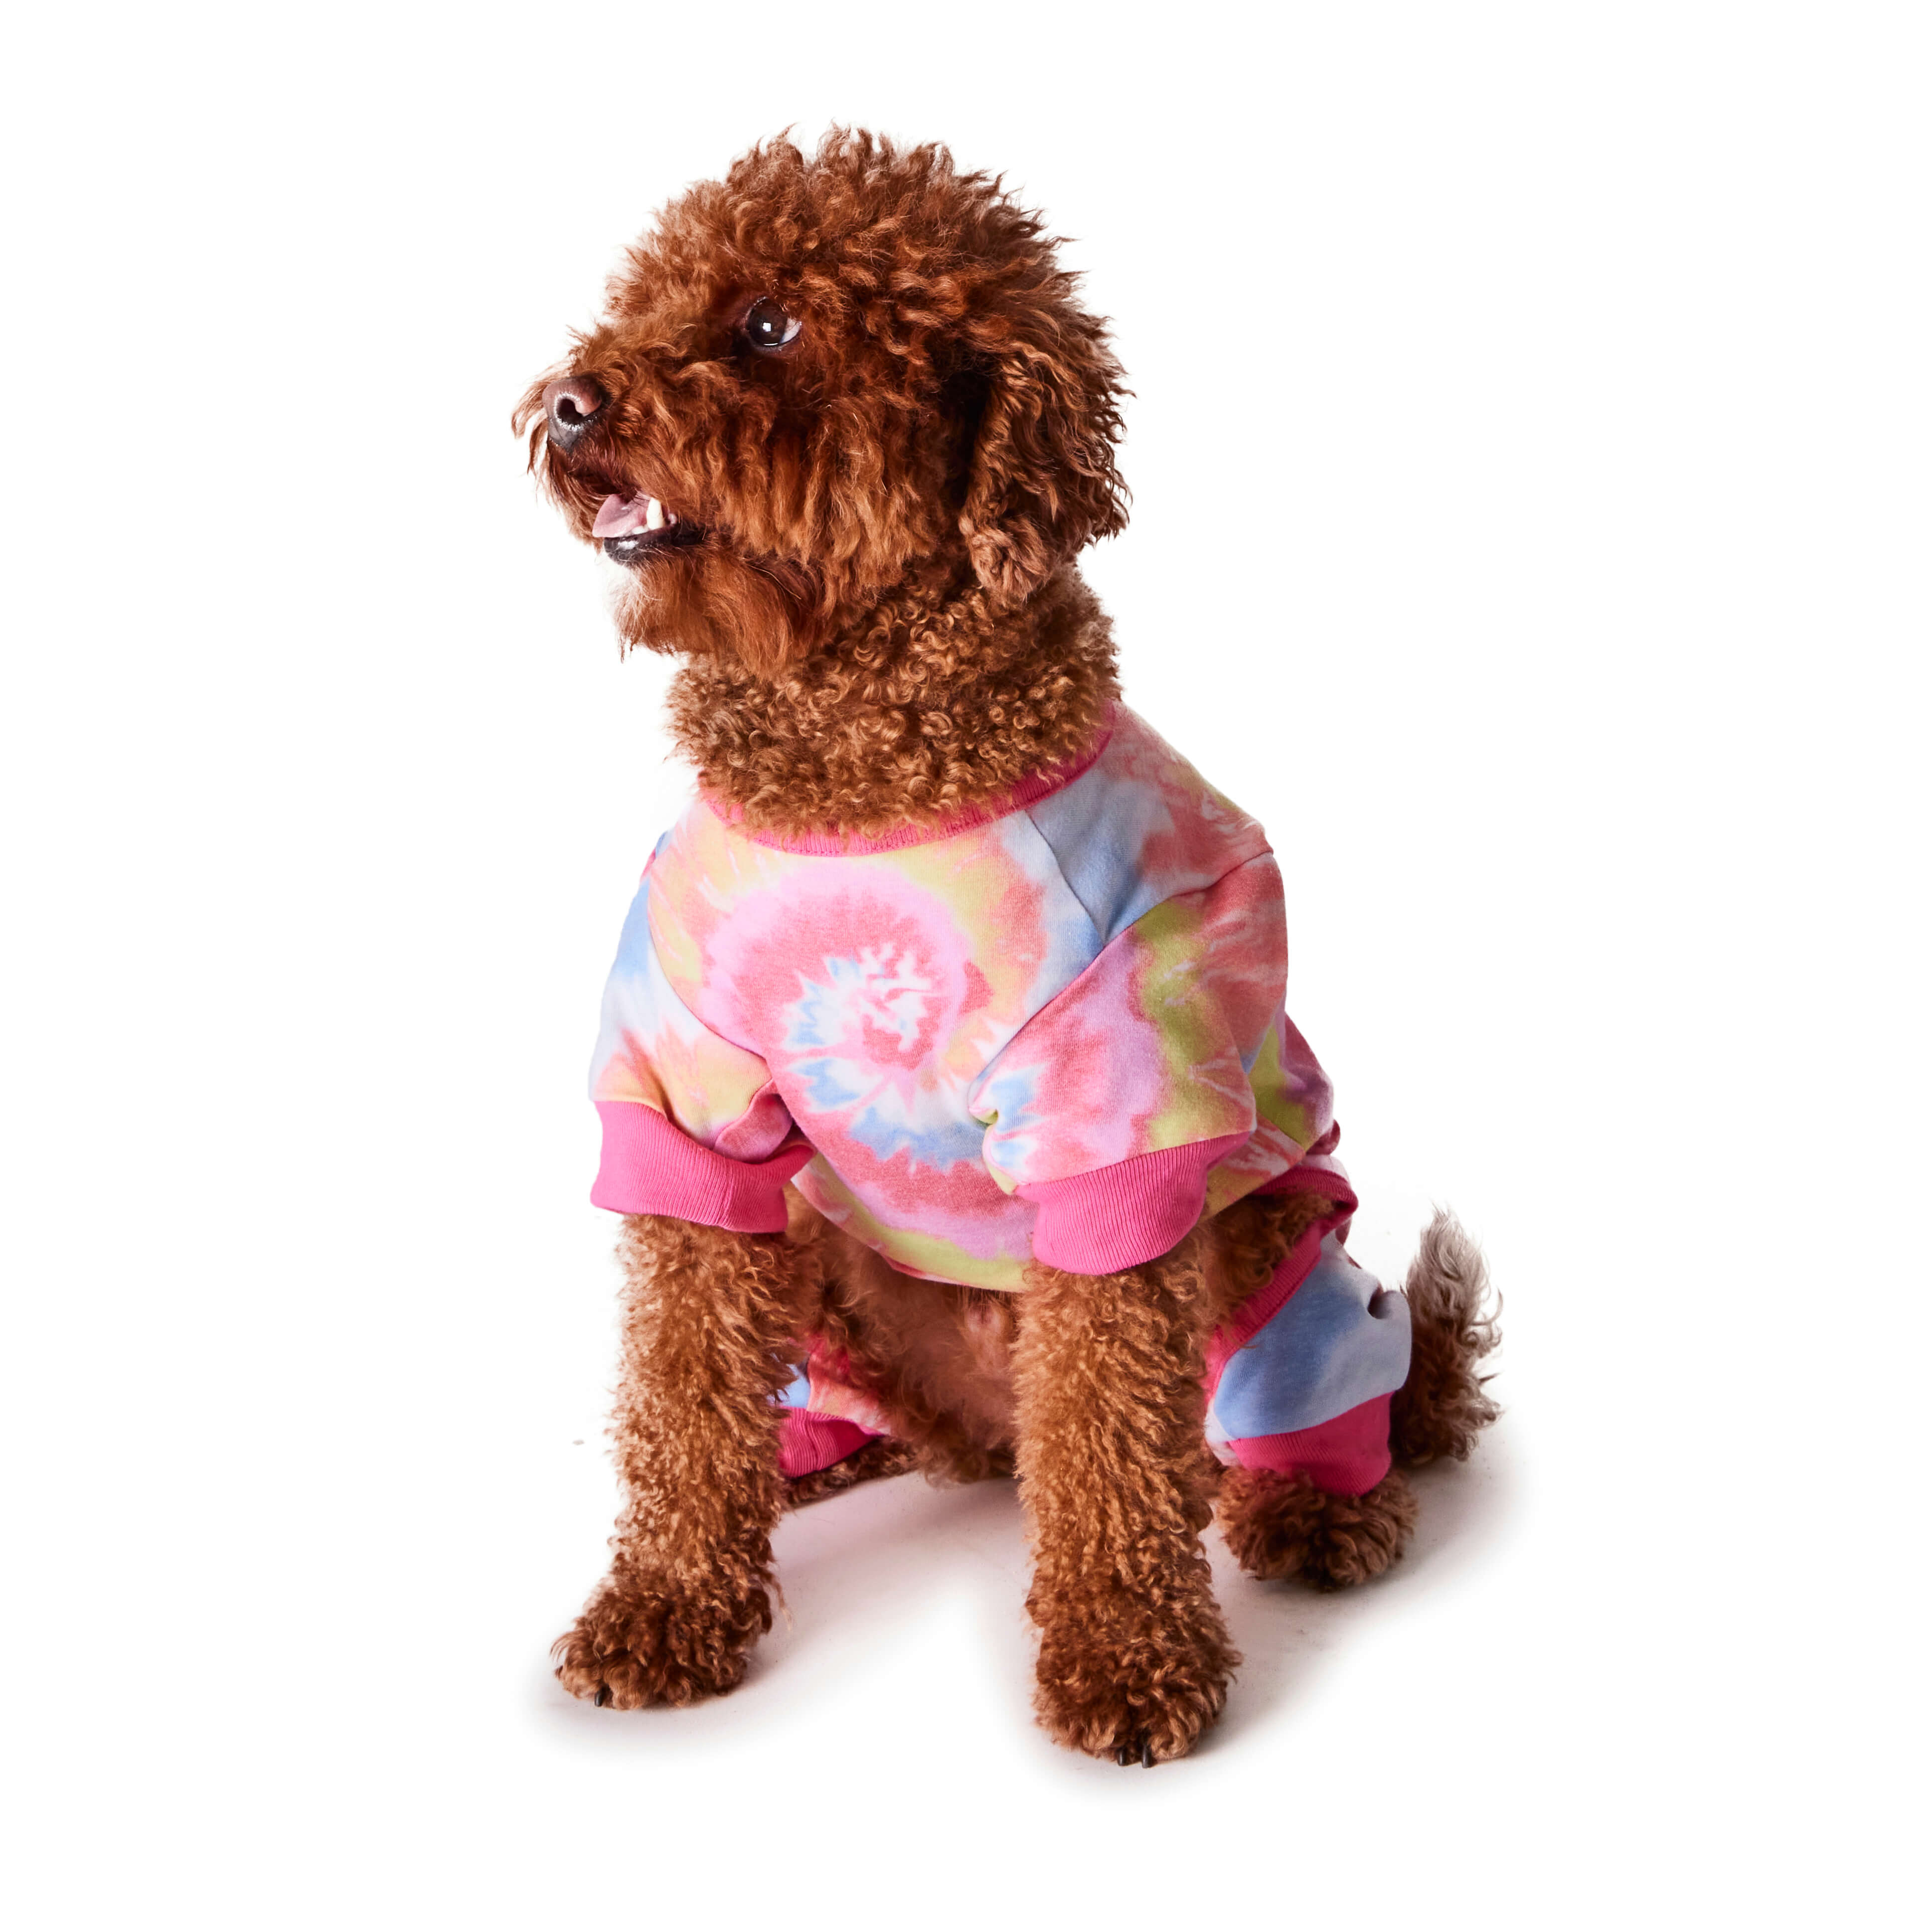 hotel doggy hot pink tie die dog pajamas 